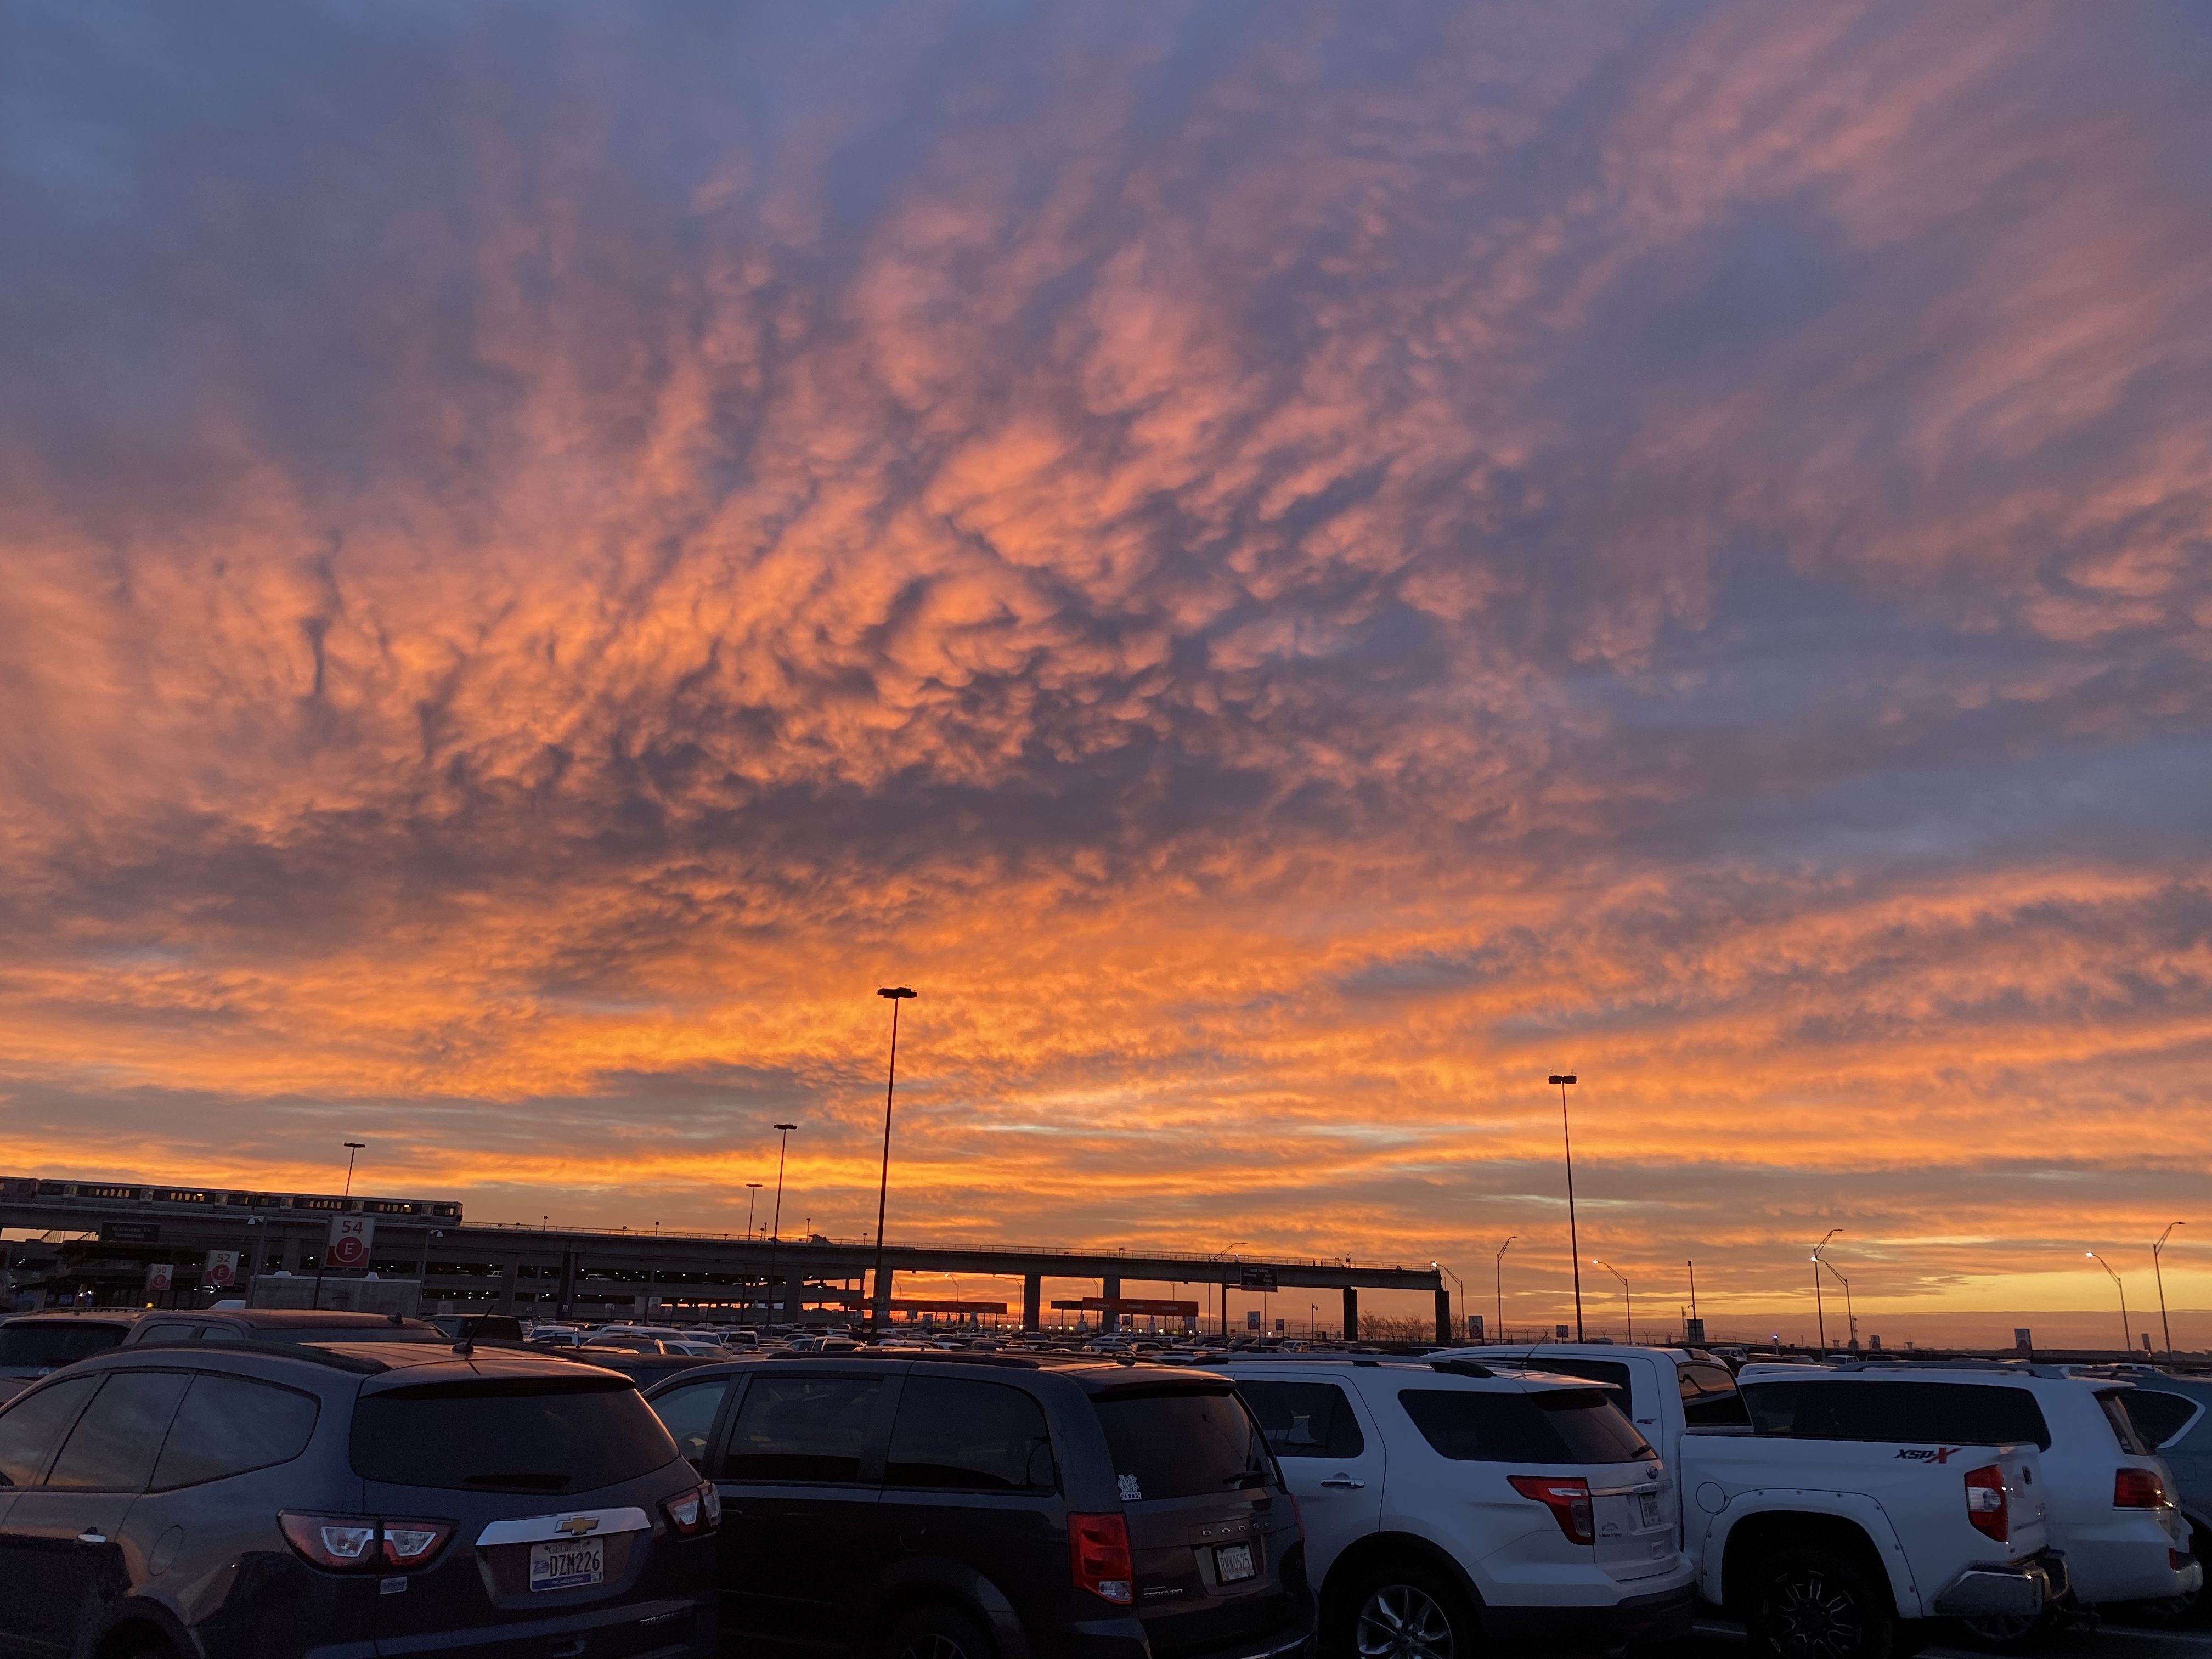 Sunrise from the airport in Atlanta, GA.